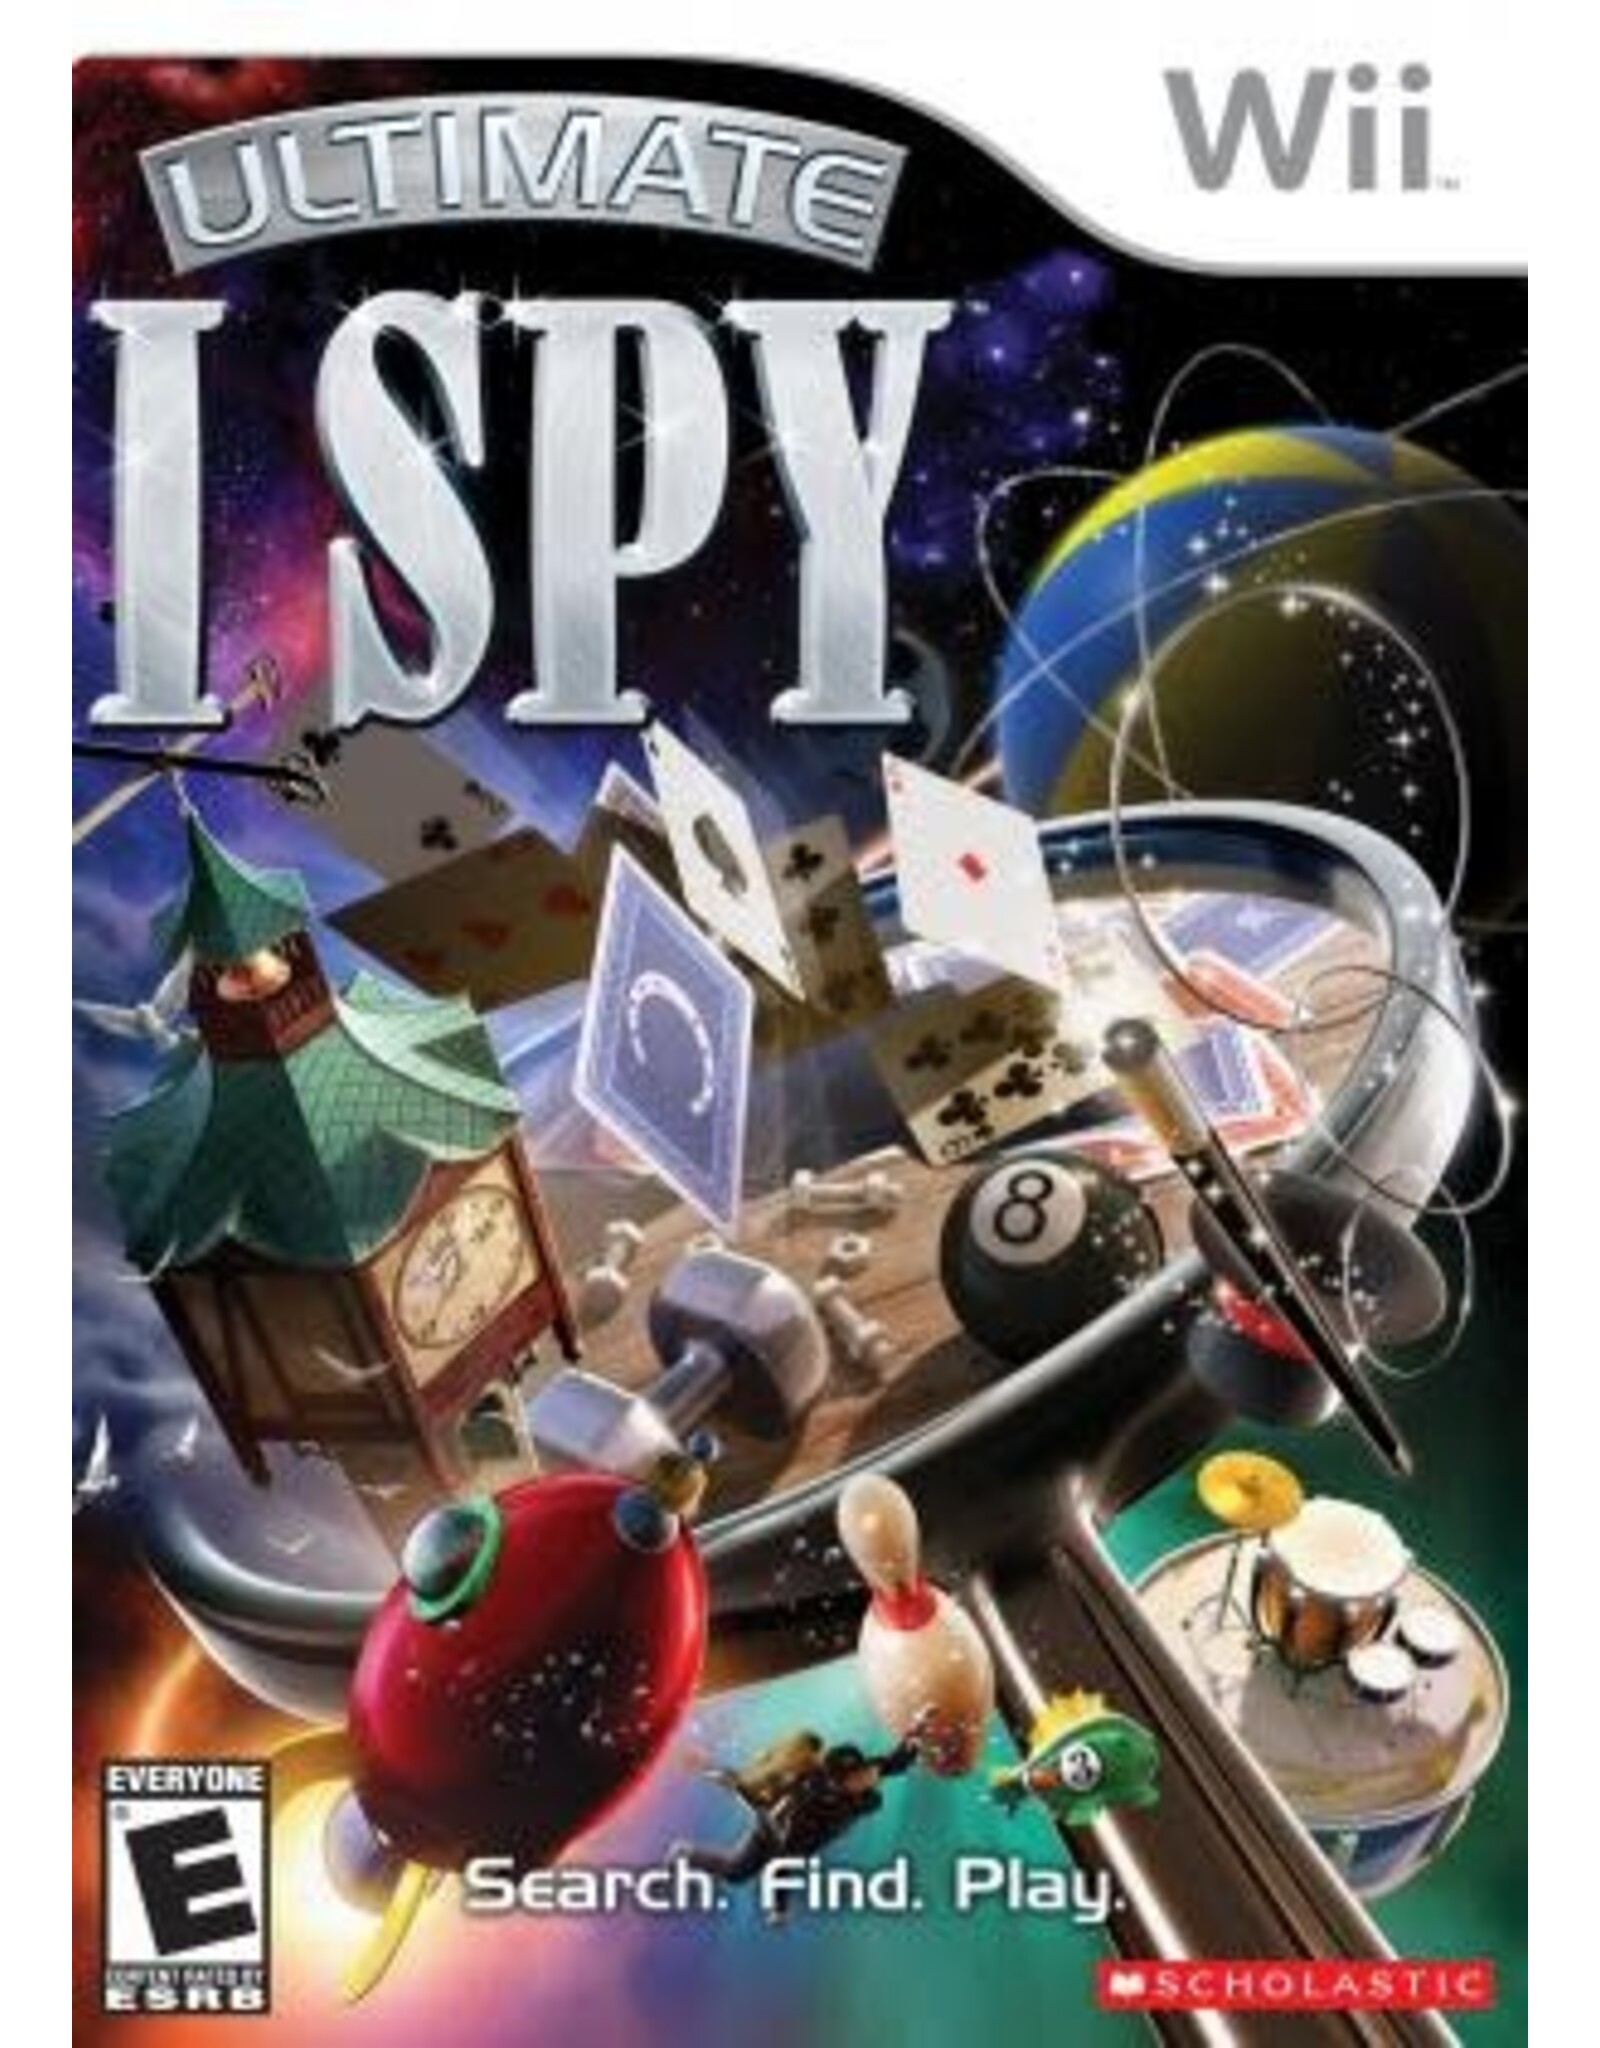 Wii Ultimate I Spy (CiB)